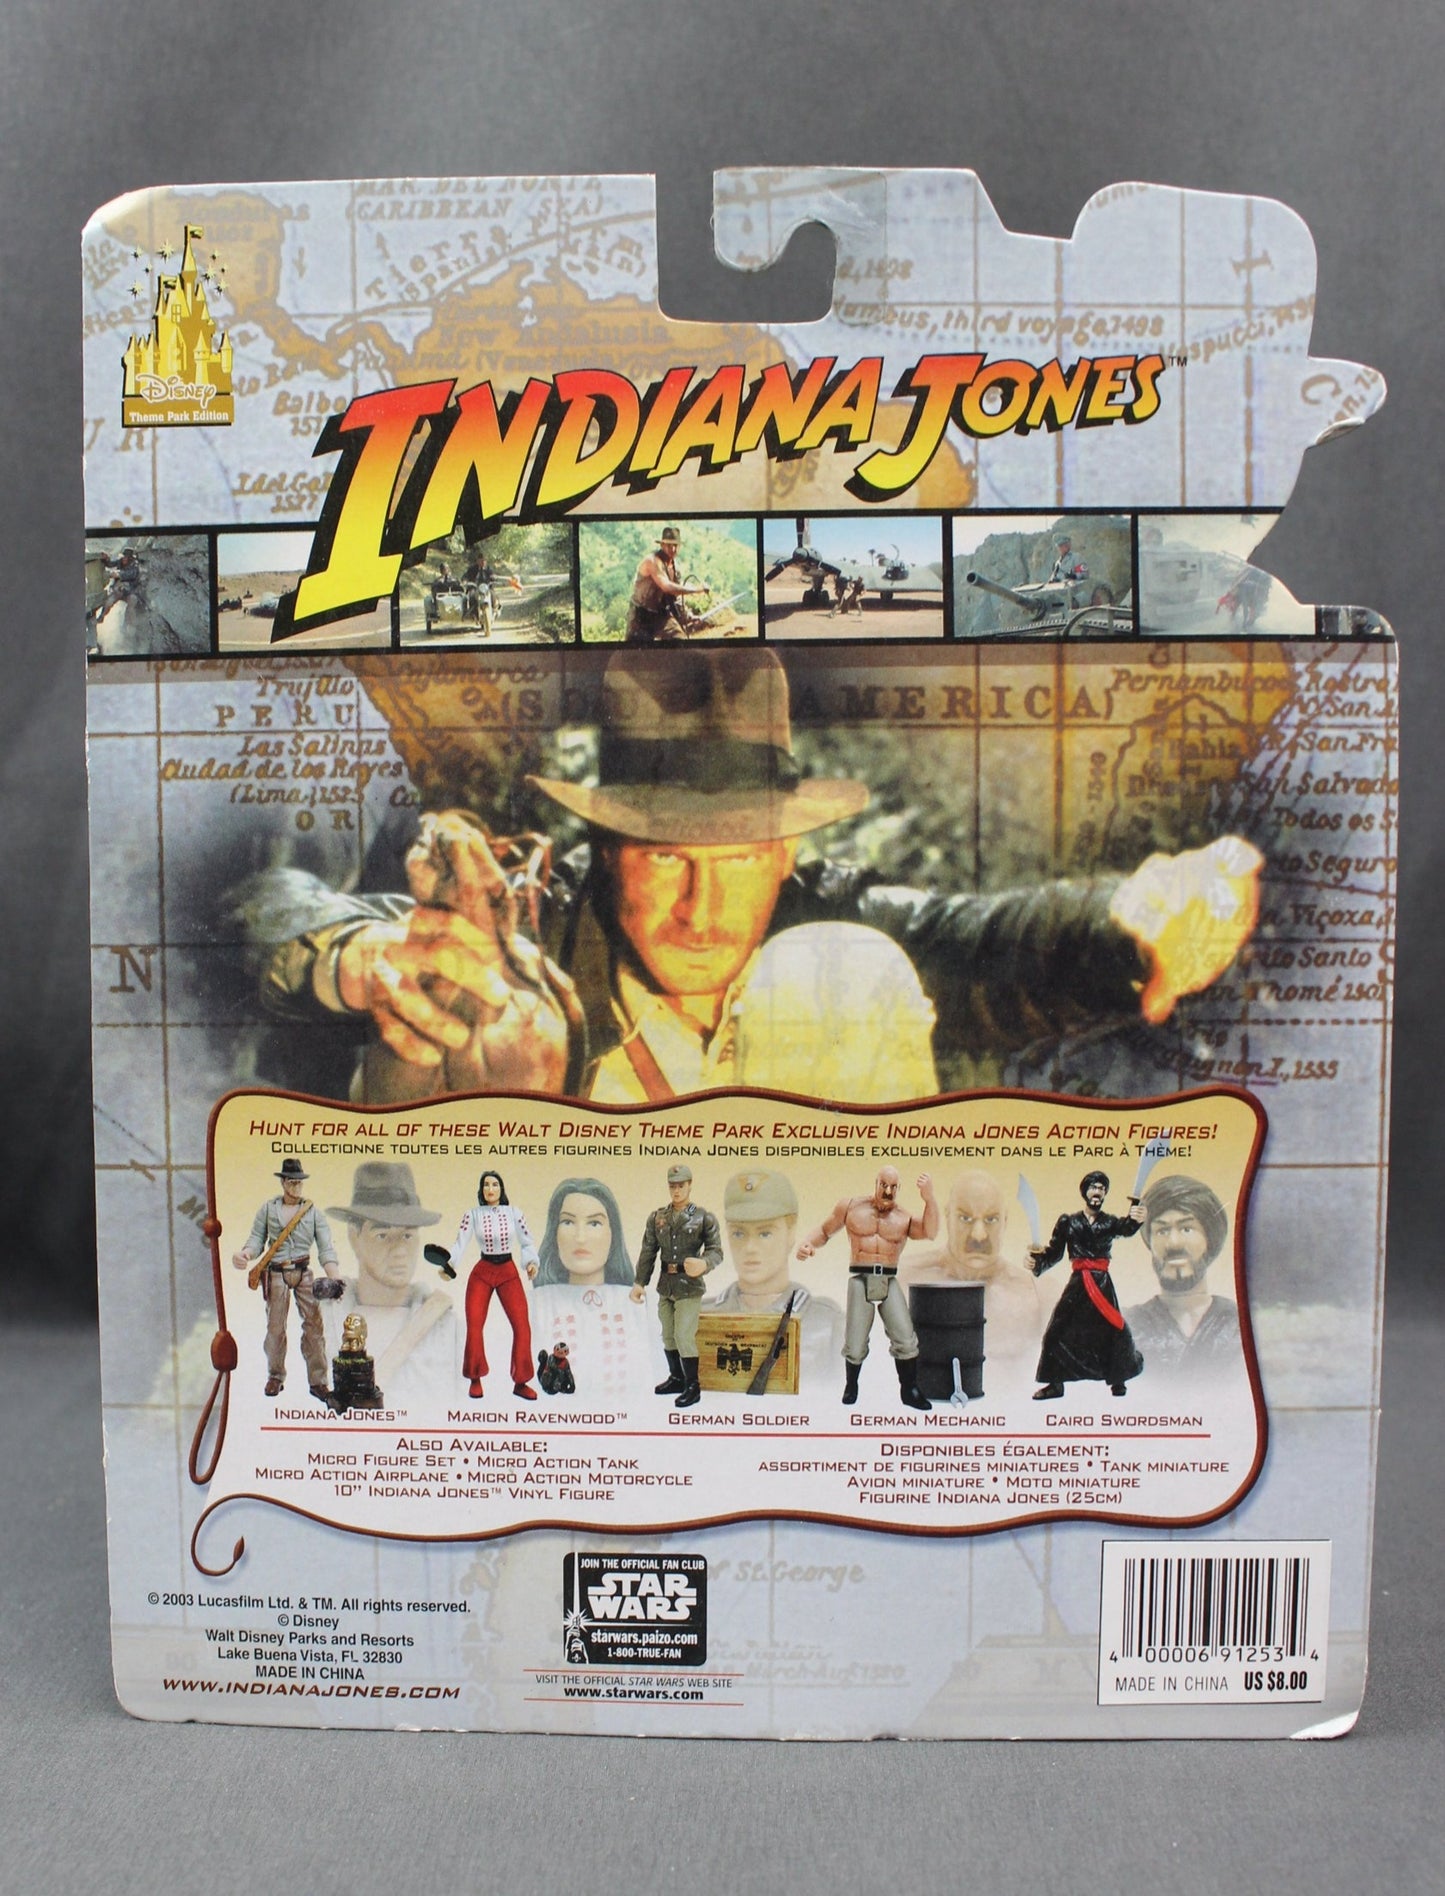 Marion Ravenwood - Disney Lucasfilm Theme Park Edition Indiana Jones